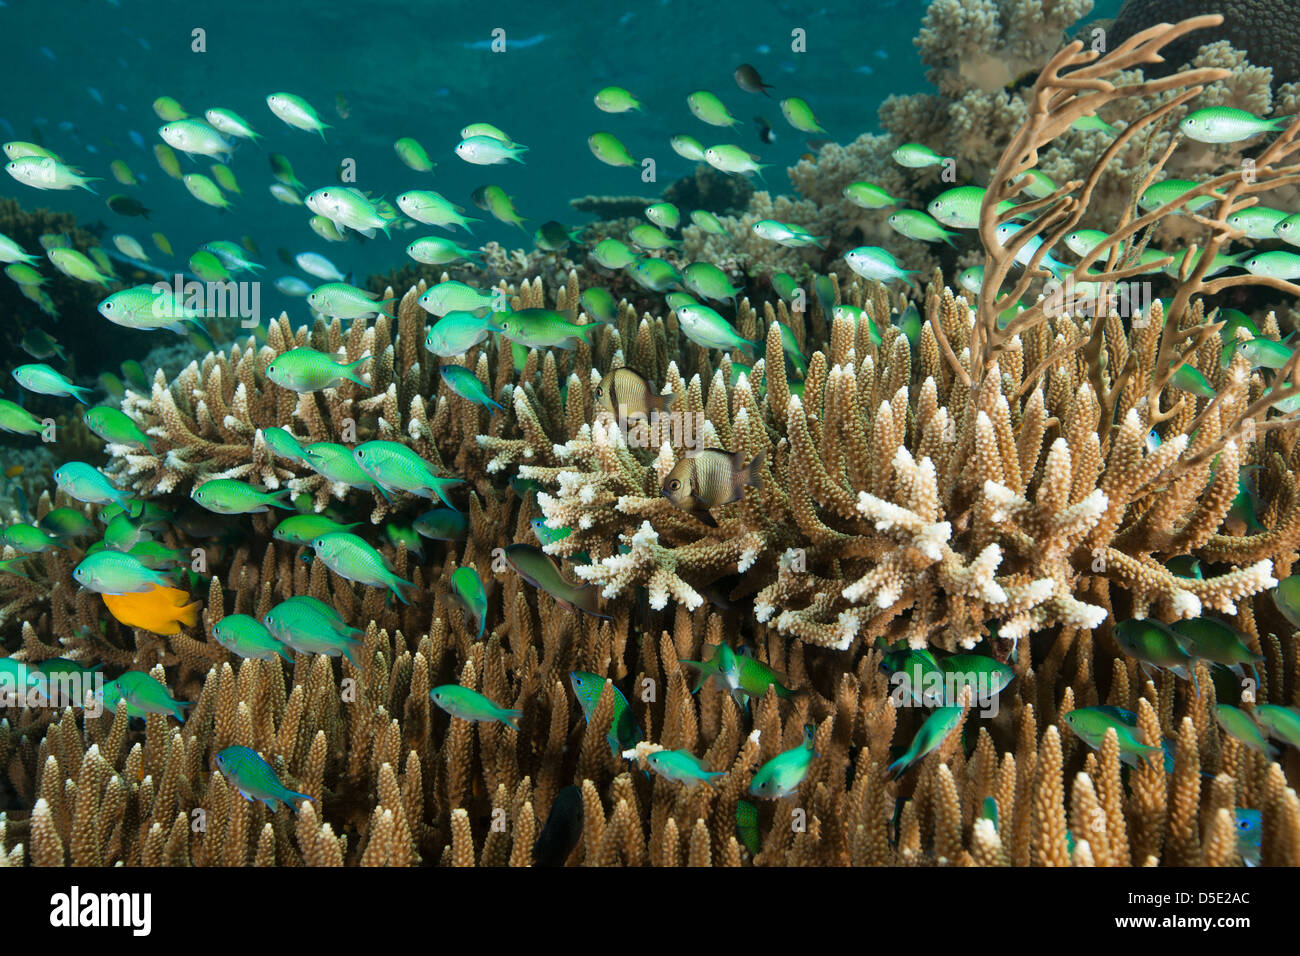 Blue-green Chromis (Chromis viridis), Lemon Damsel (Pomacentrus moluccensis), and other fish on a tropical coral reef Stock Photo